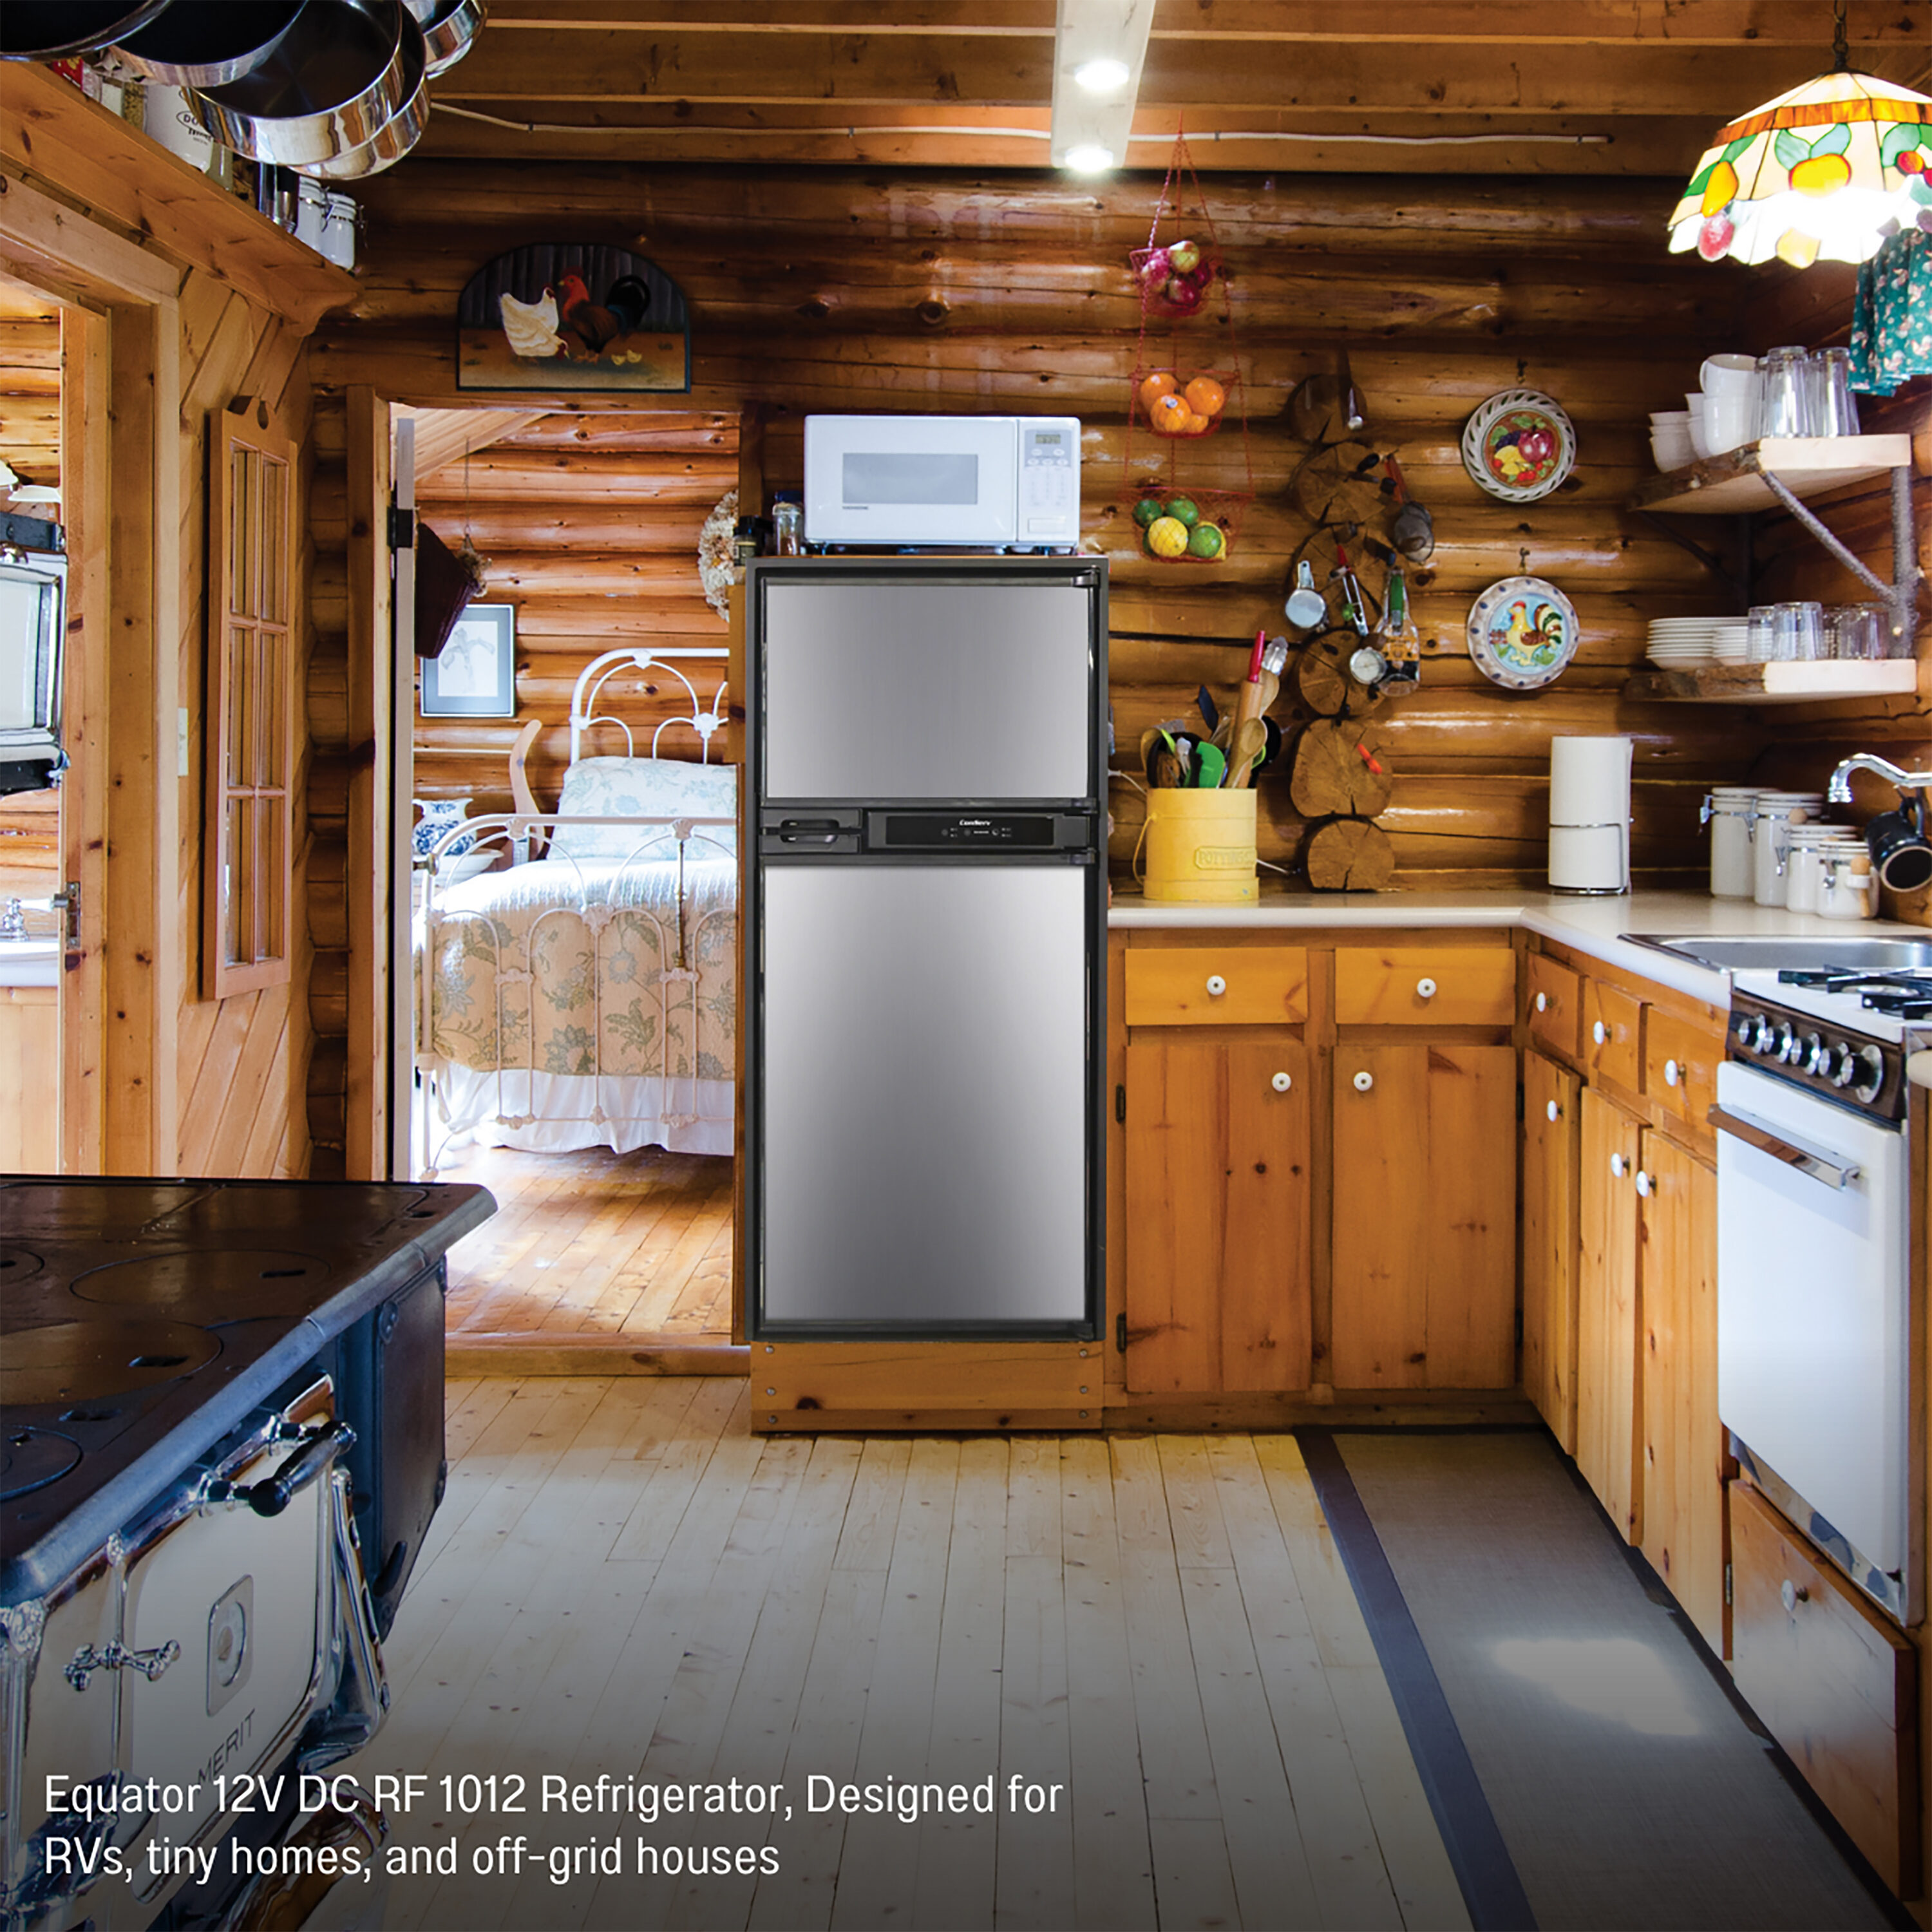  Conserv RV Refrigerator 10 cf/12V/Stainless : Appliances